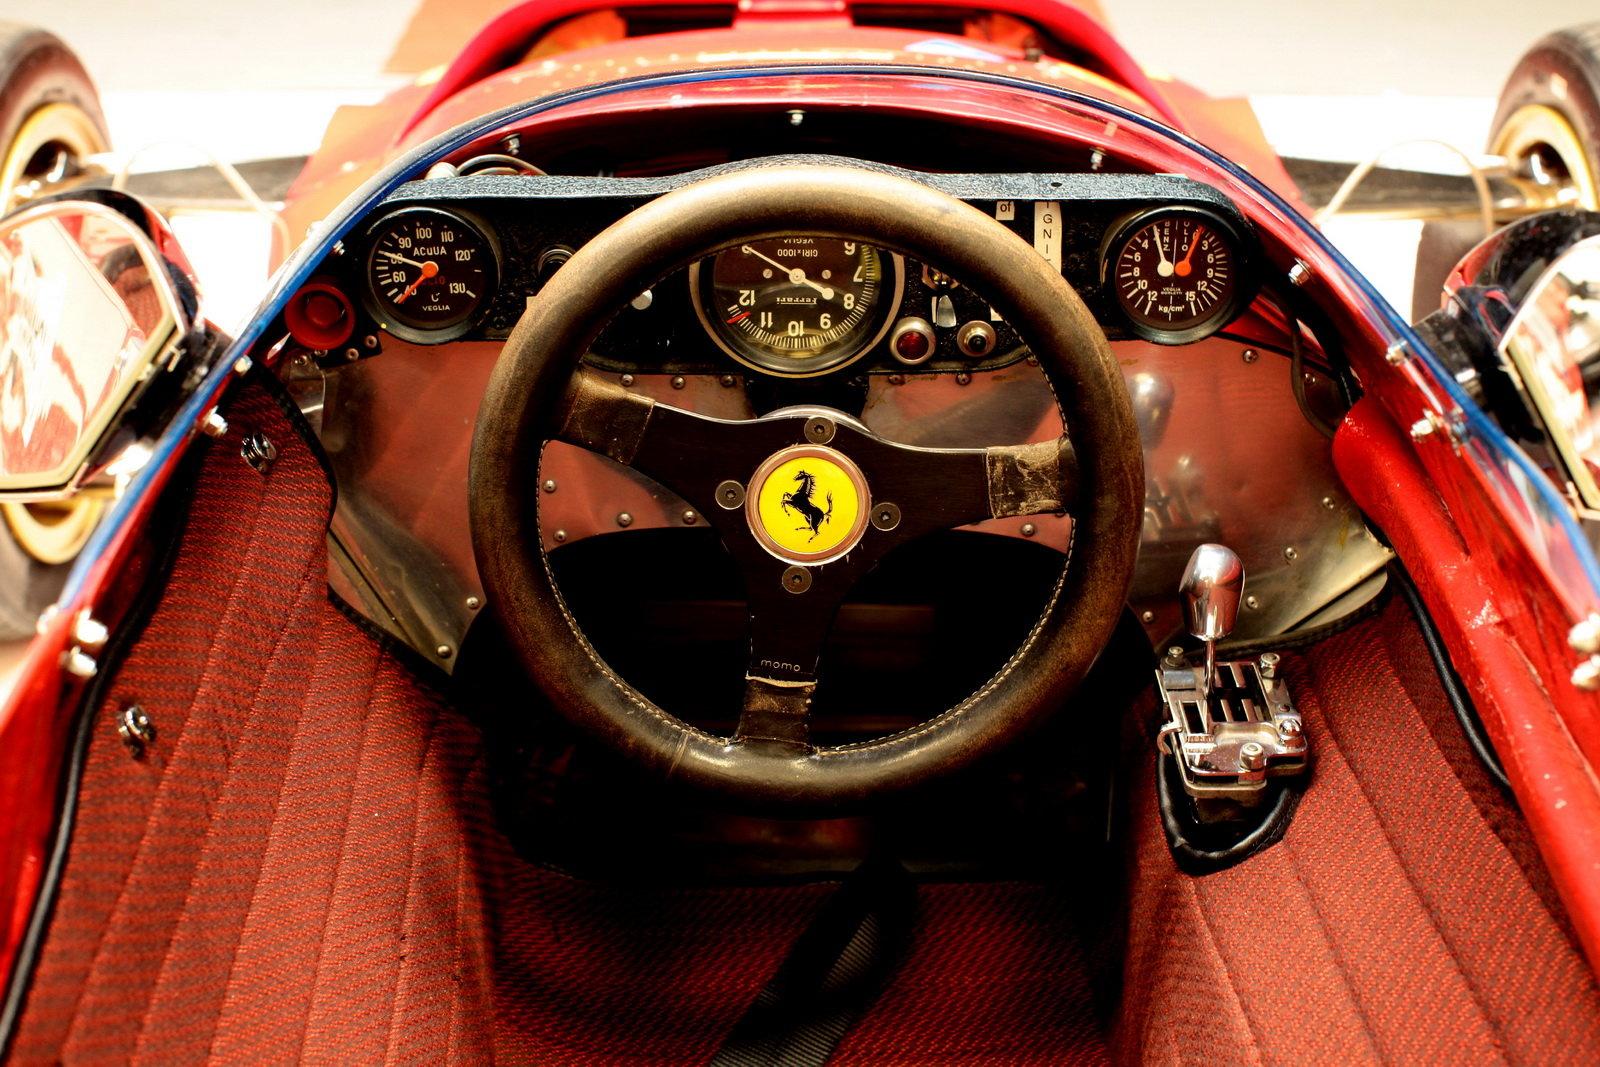 The cockpit of the Ferrari 312B.